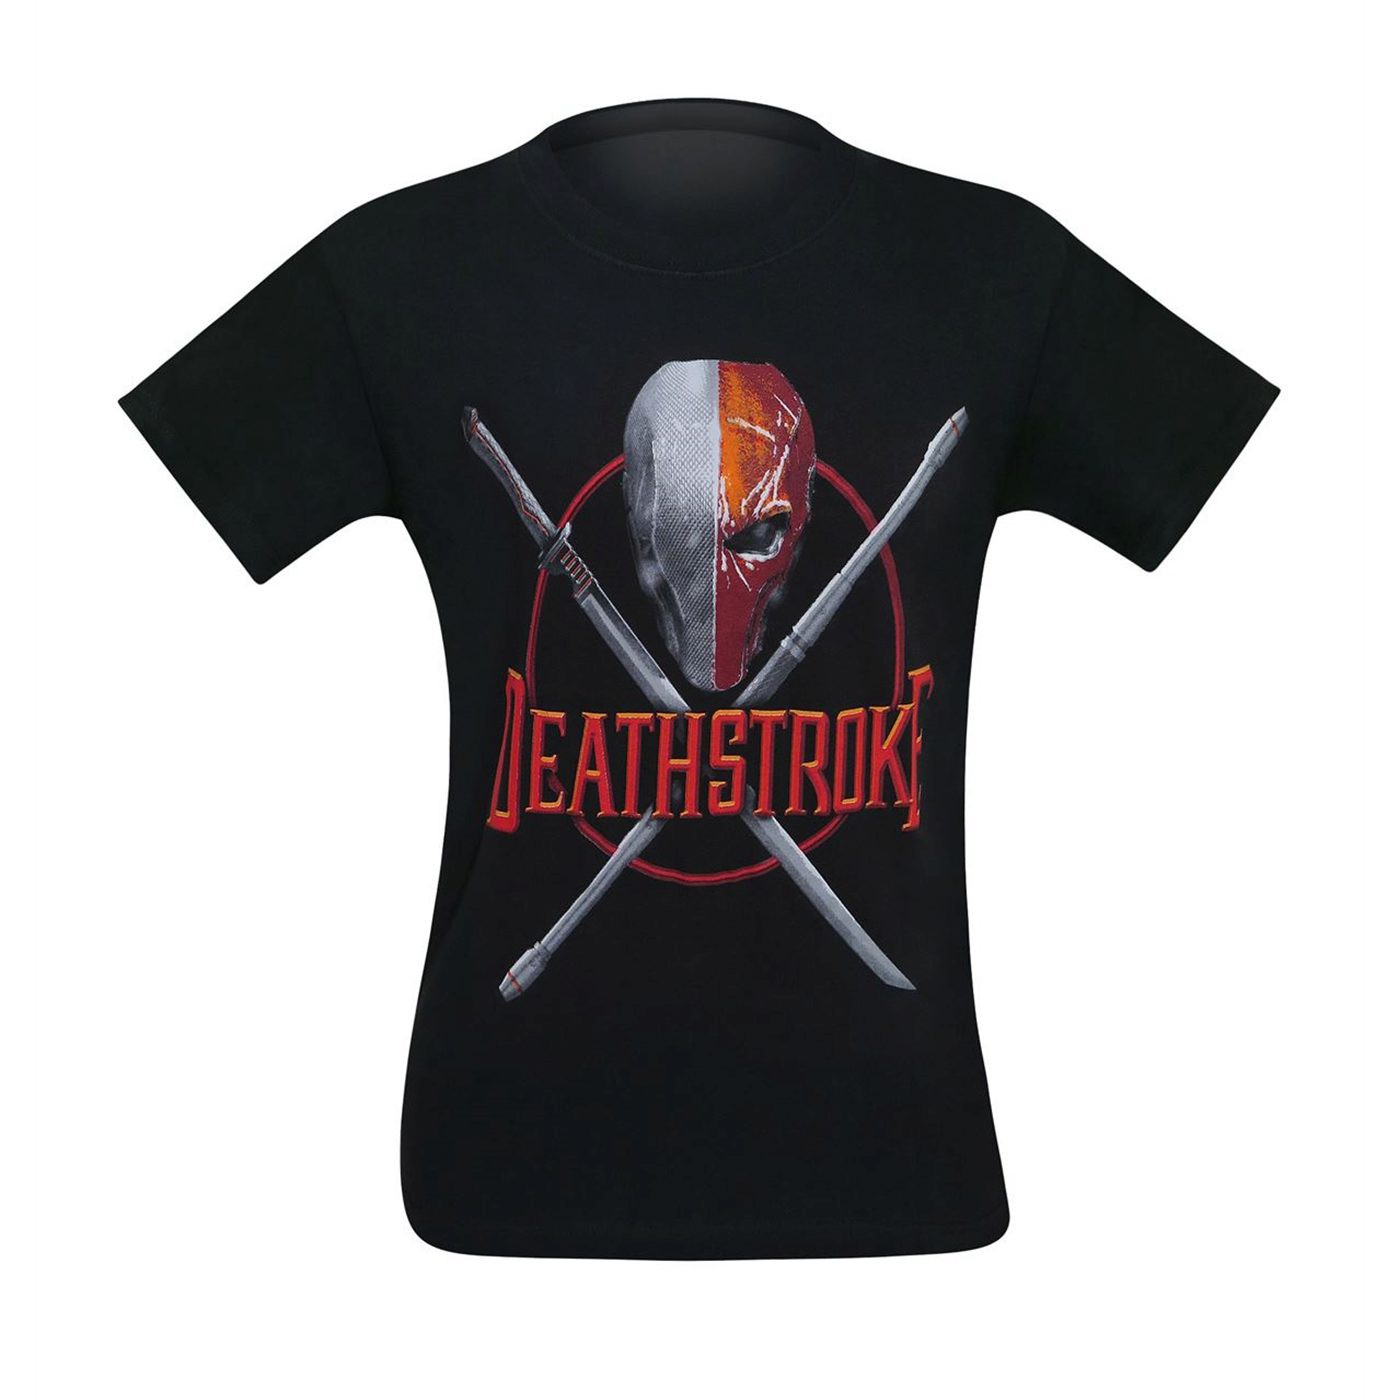 Deathstroke Weapons Crossed Men's T-Shirt